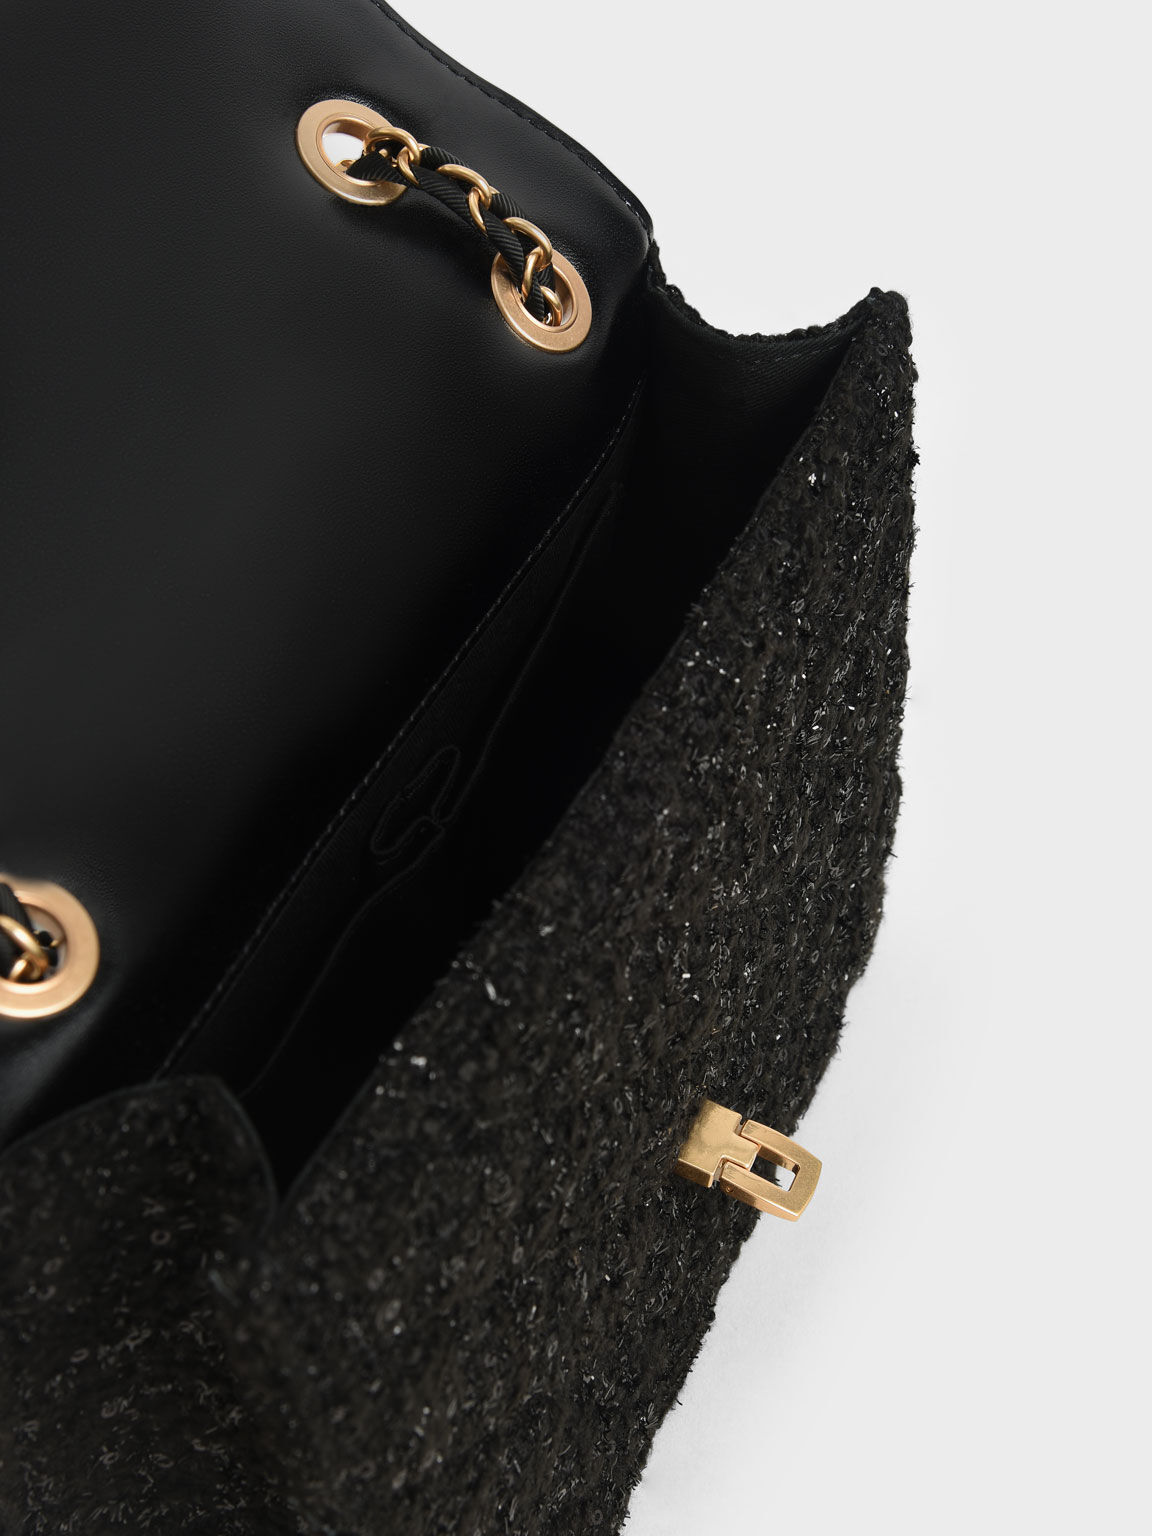 Tweed Chain Strap Bag, Black, hi-res